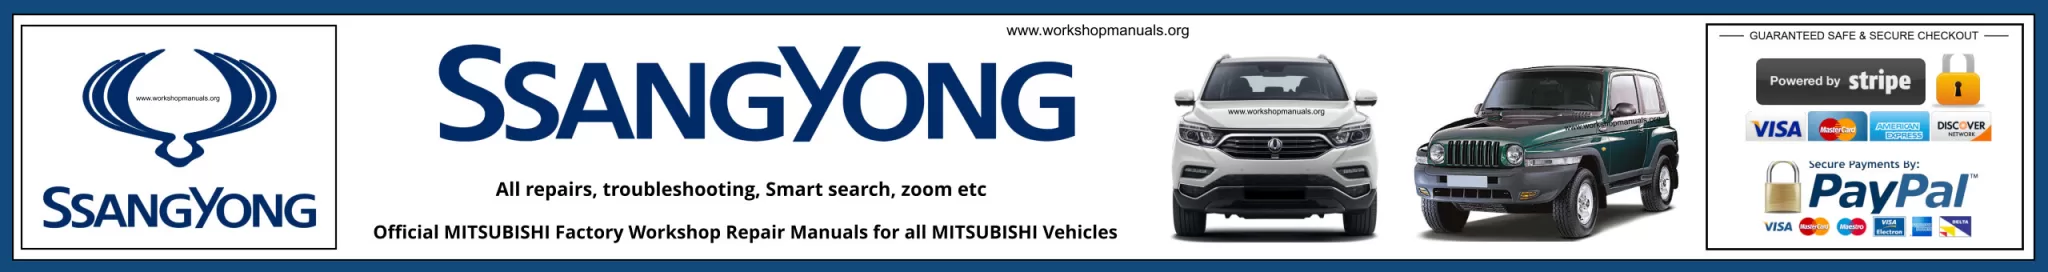 Ssangyong Workshop Repair Service Manual Banner